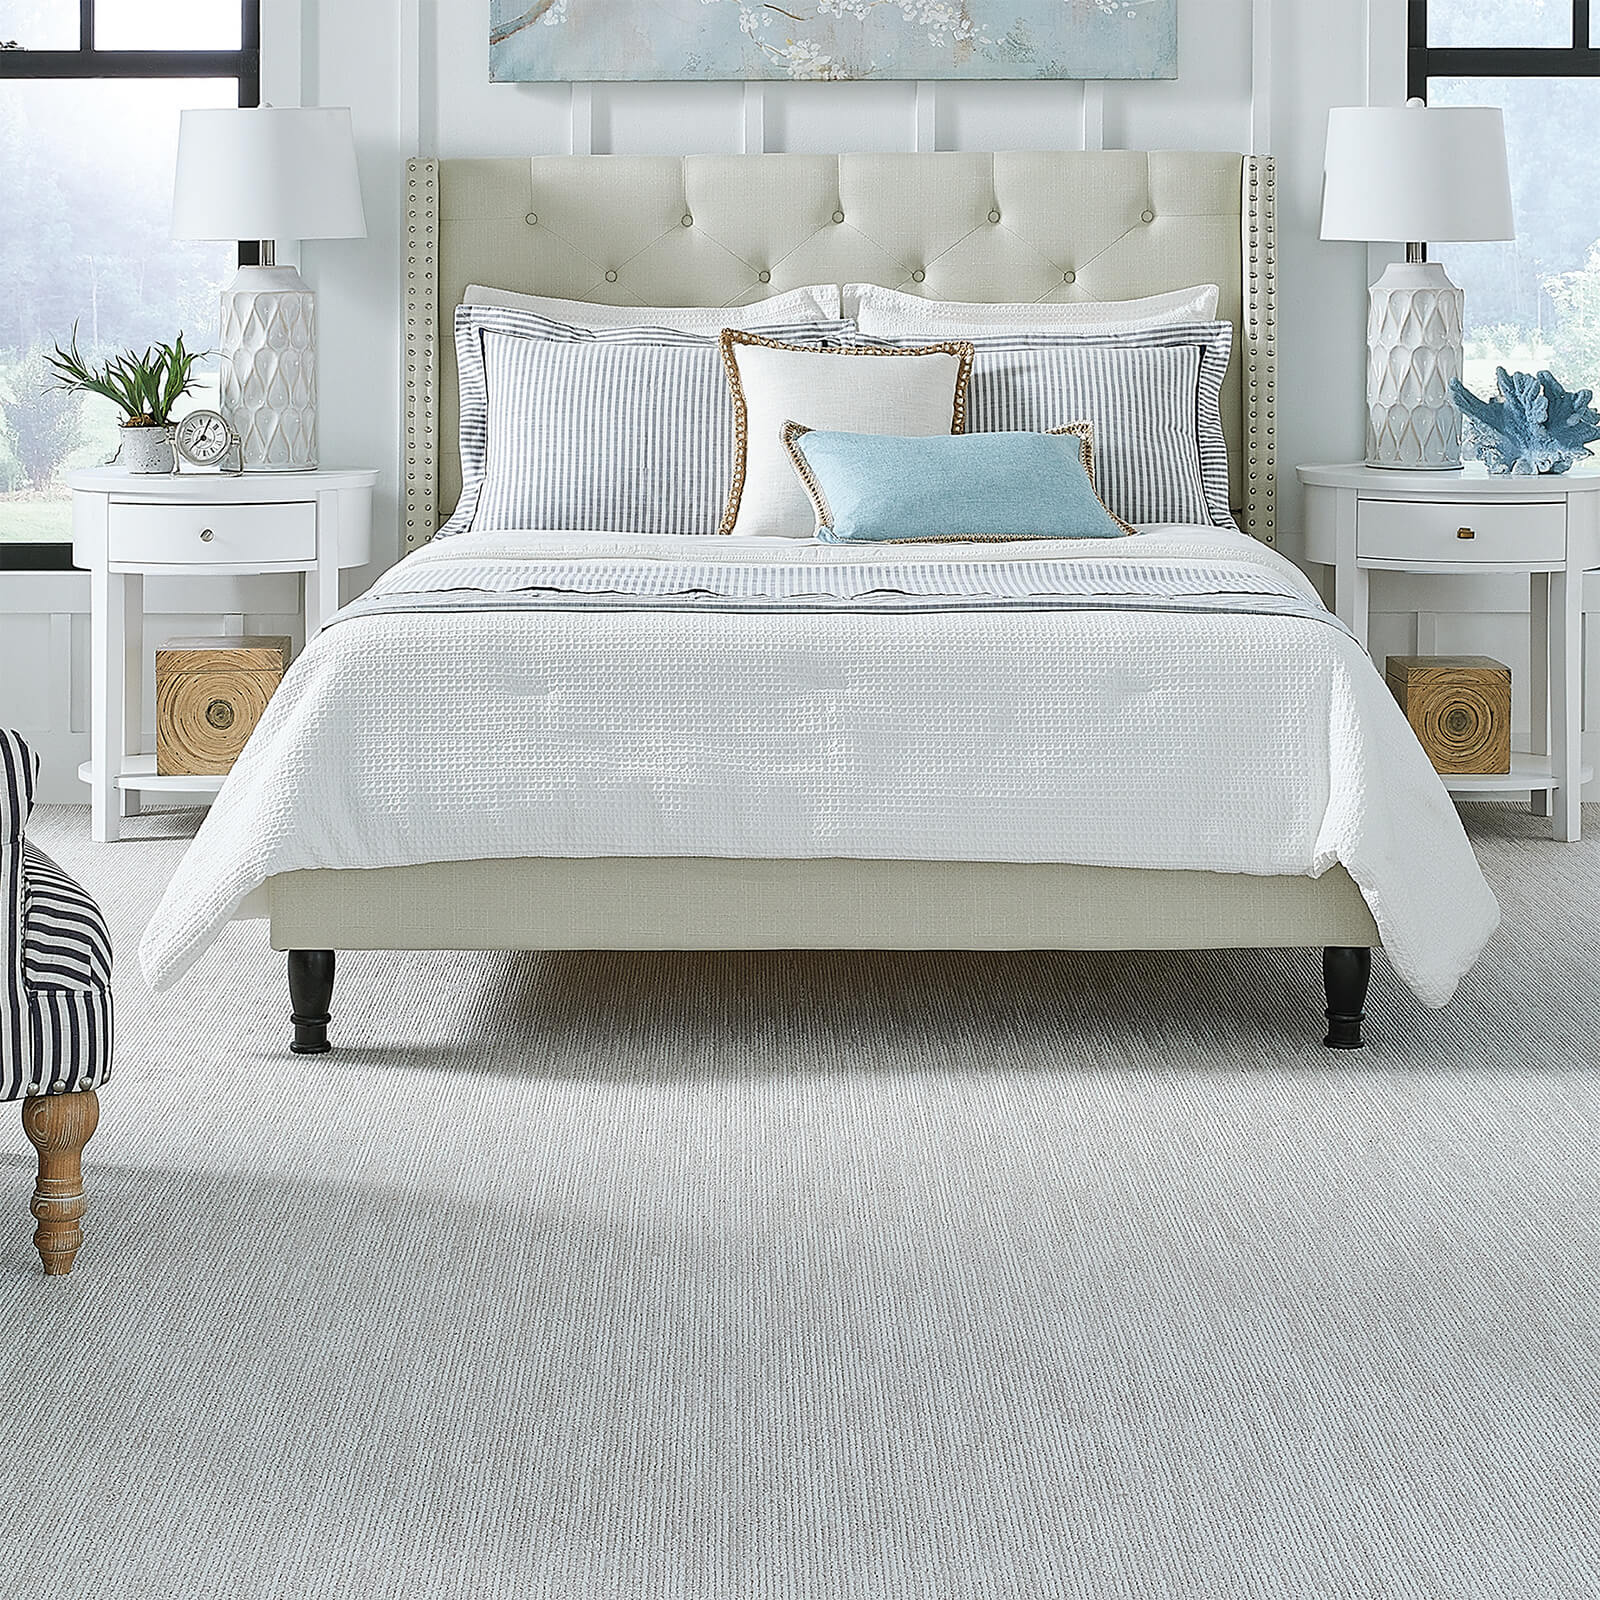 Bedroom carpet | Roberts Carpet & Fine Floors